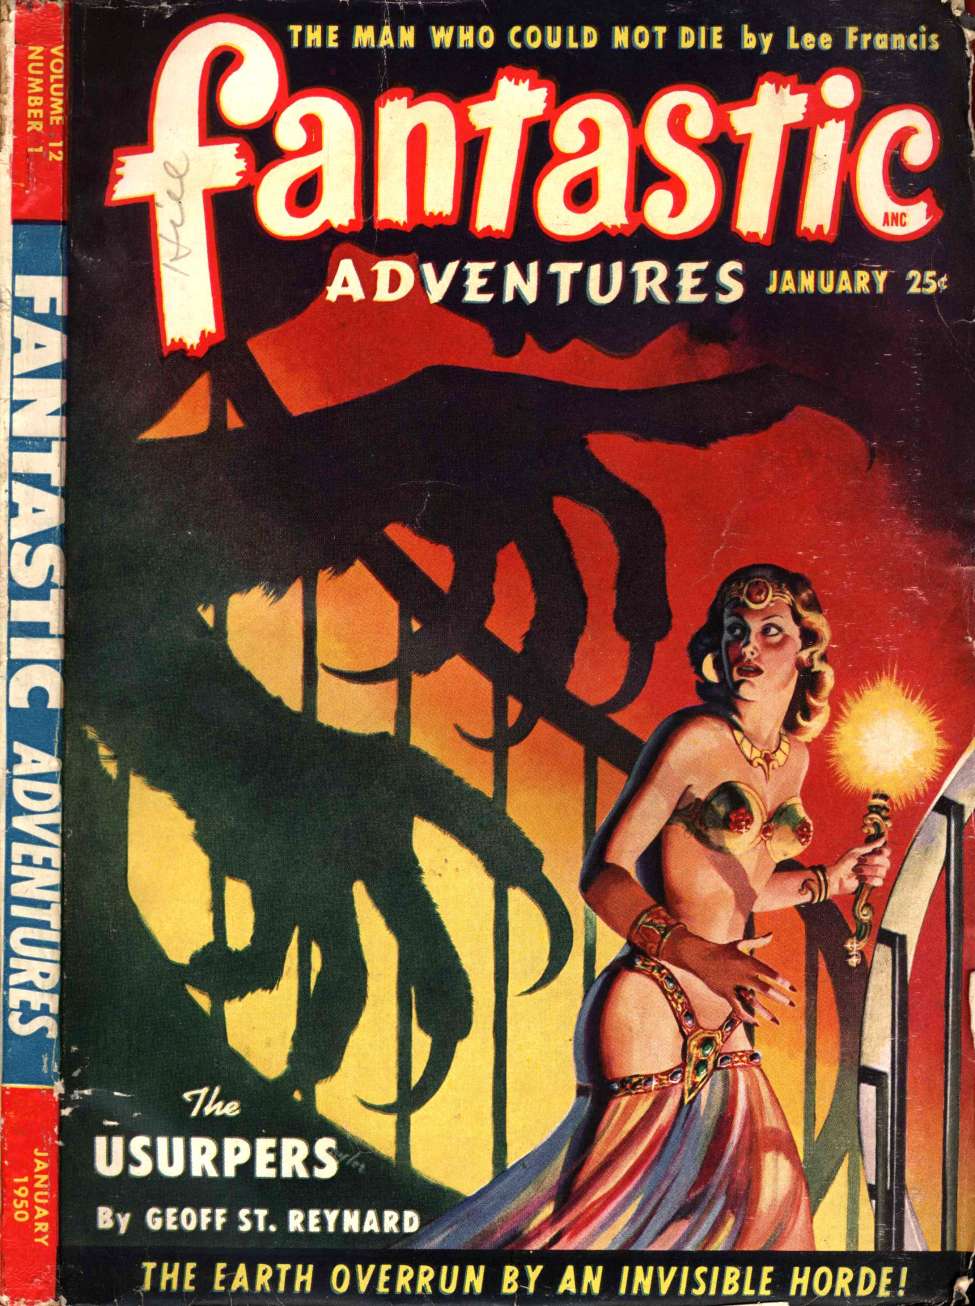 Comic Book Cover For Fantastic Adventures v12 1 - The Usurpers - Geoff St. Reynard